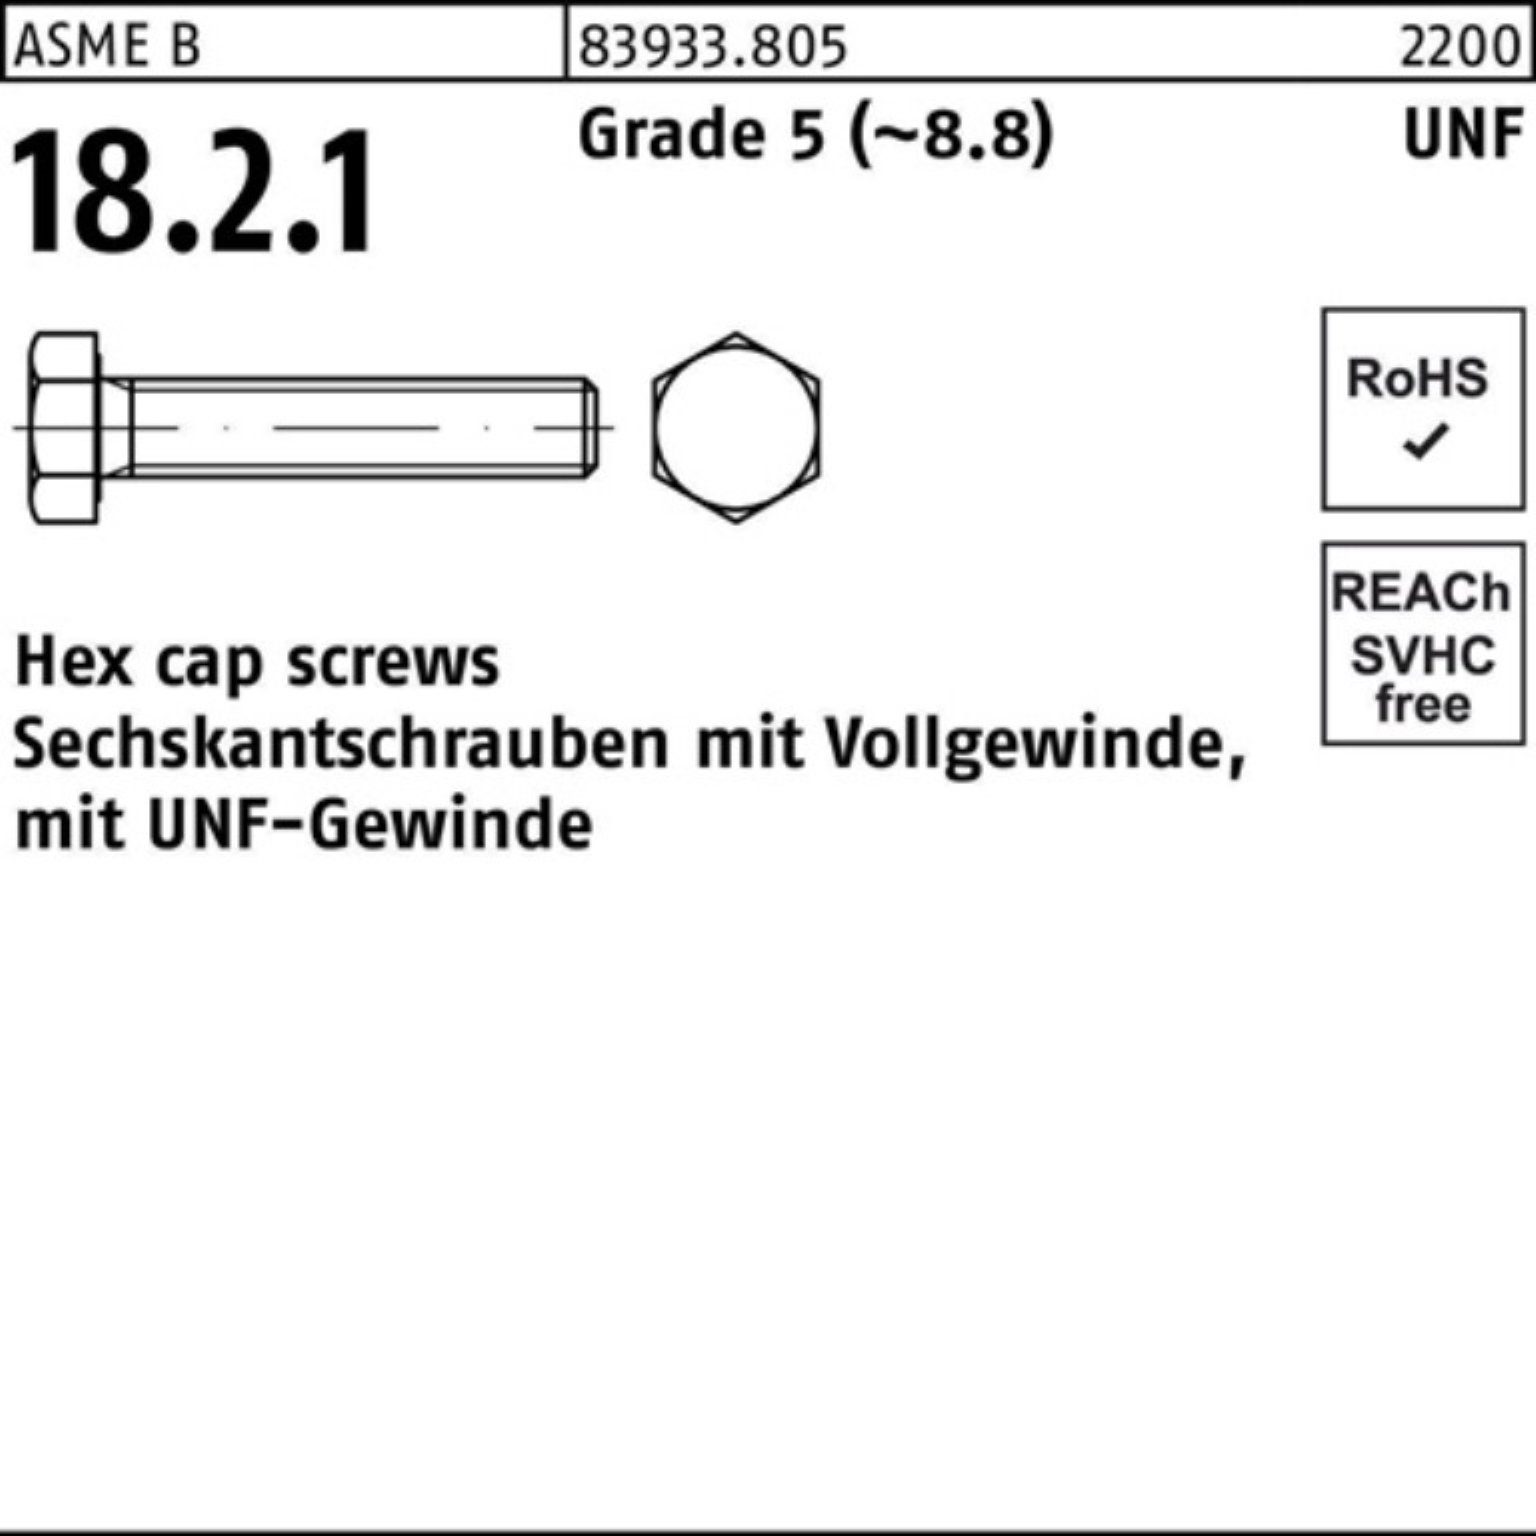 Reyher Sechskantschraube 100er Pack Sechskantschraube R 83933 UNF-Gewinde VG 7/8x 2 Grade 5 (8